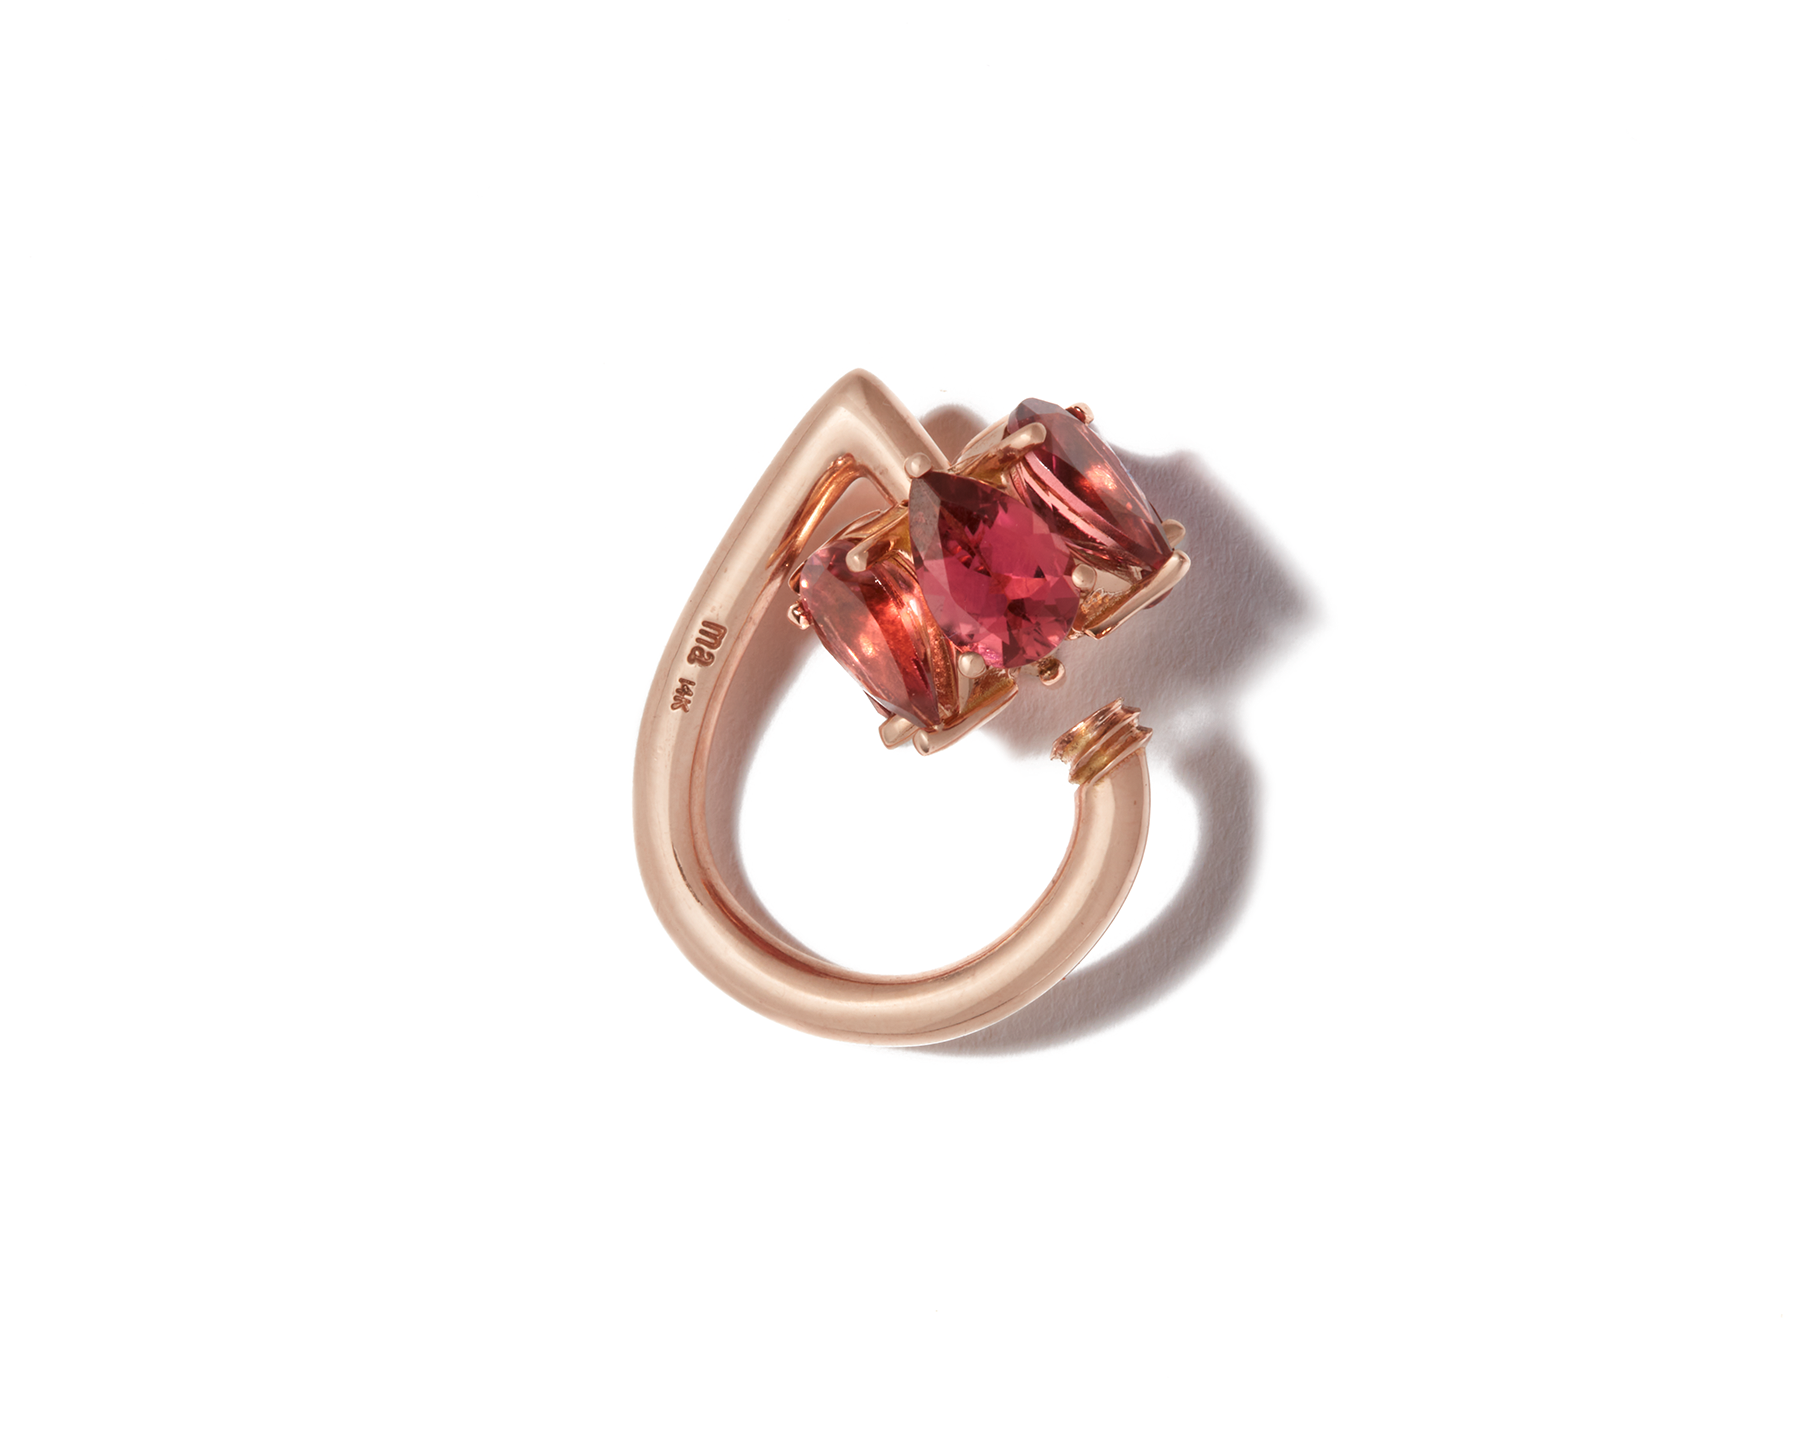 Rose gold drop gemstone jewelry lock with open pink gemstone clasp